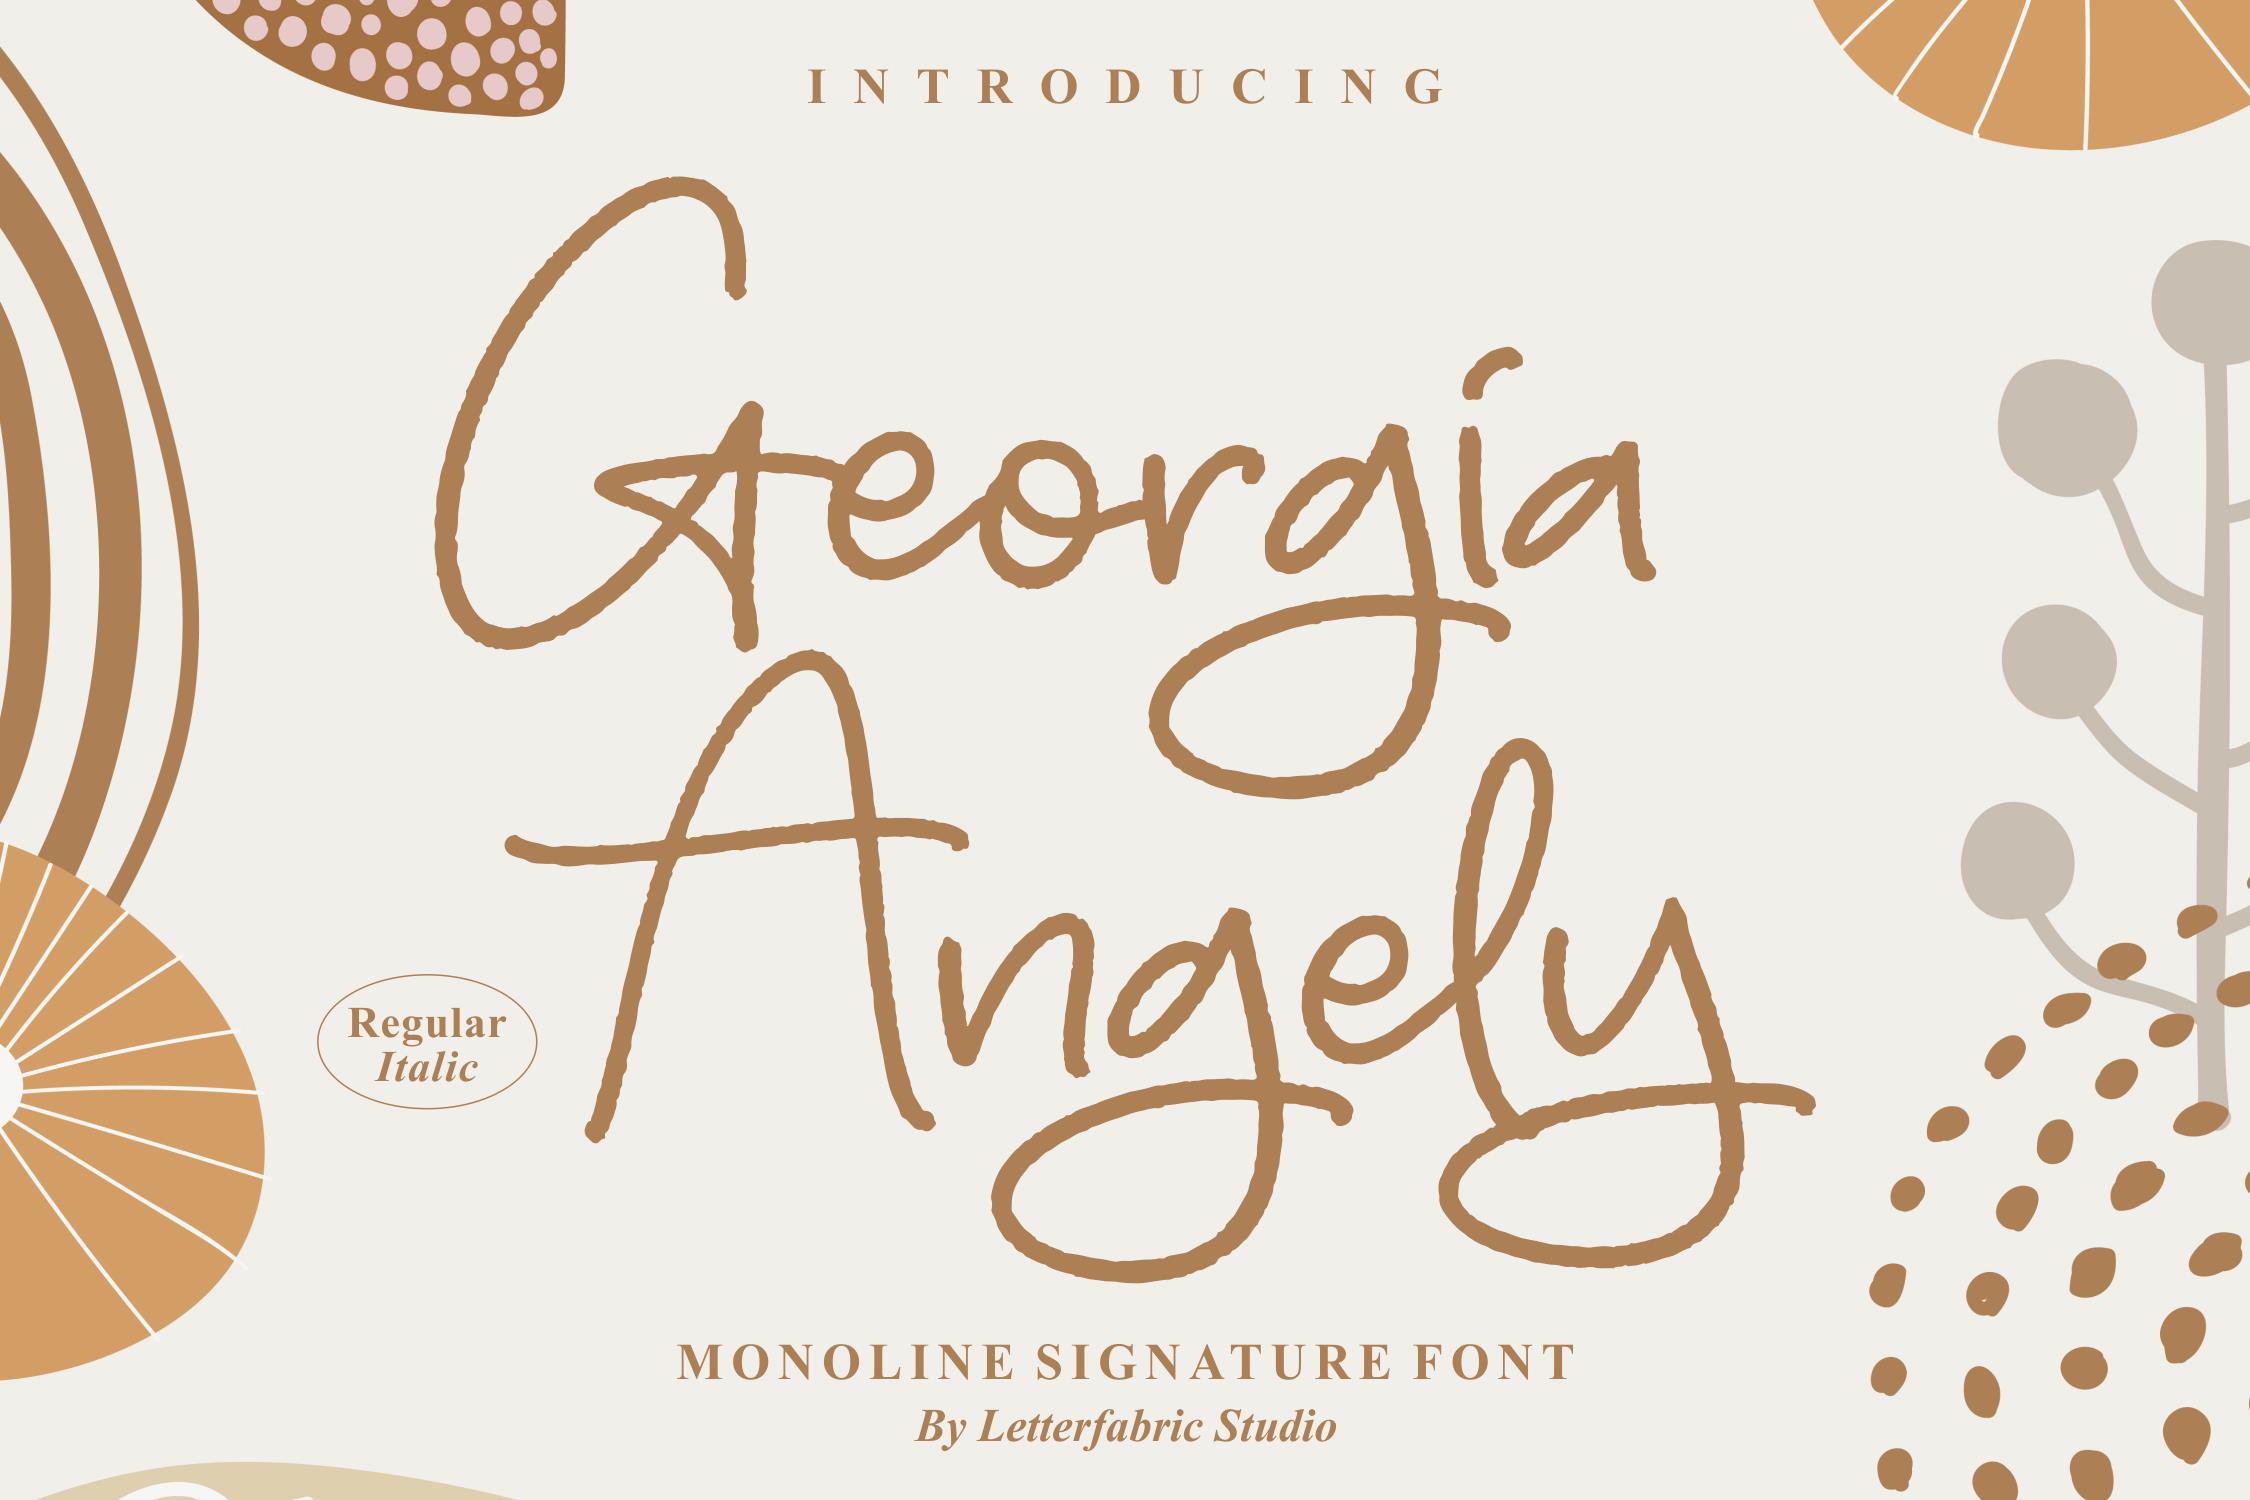 Georgia Angely Font